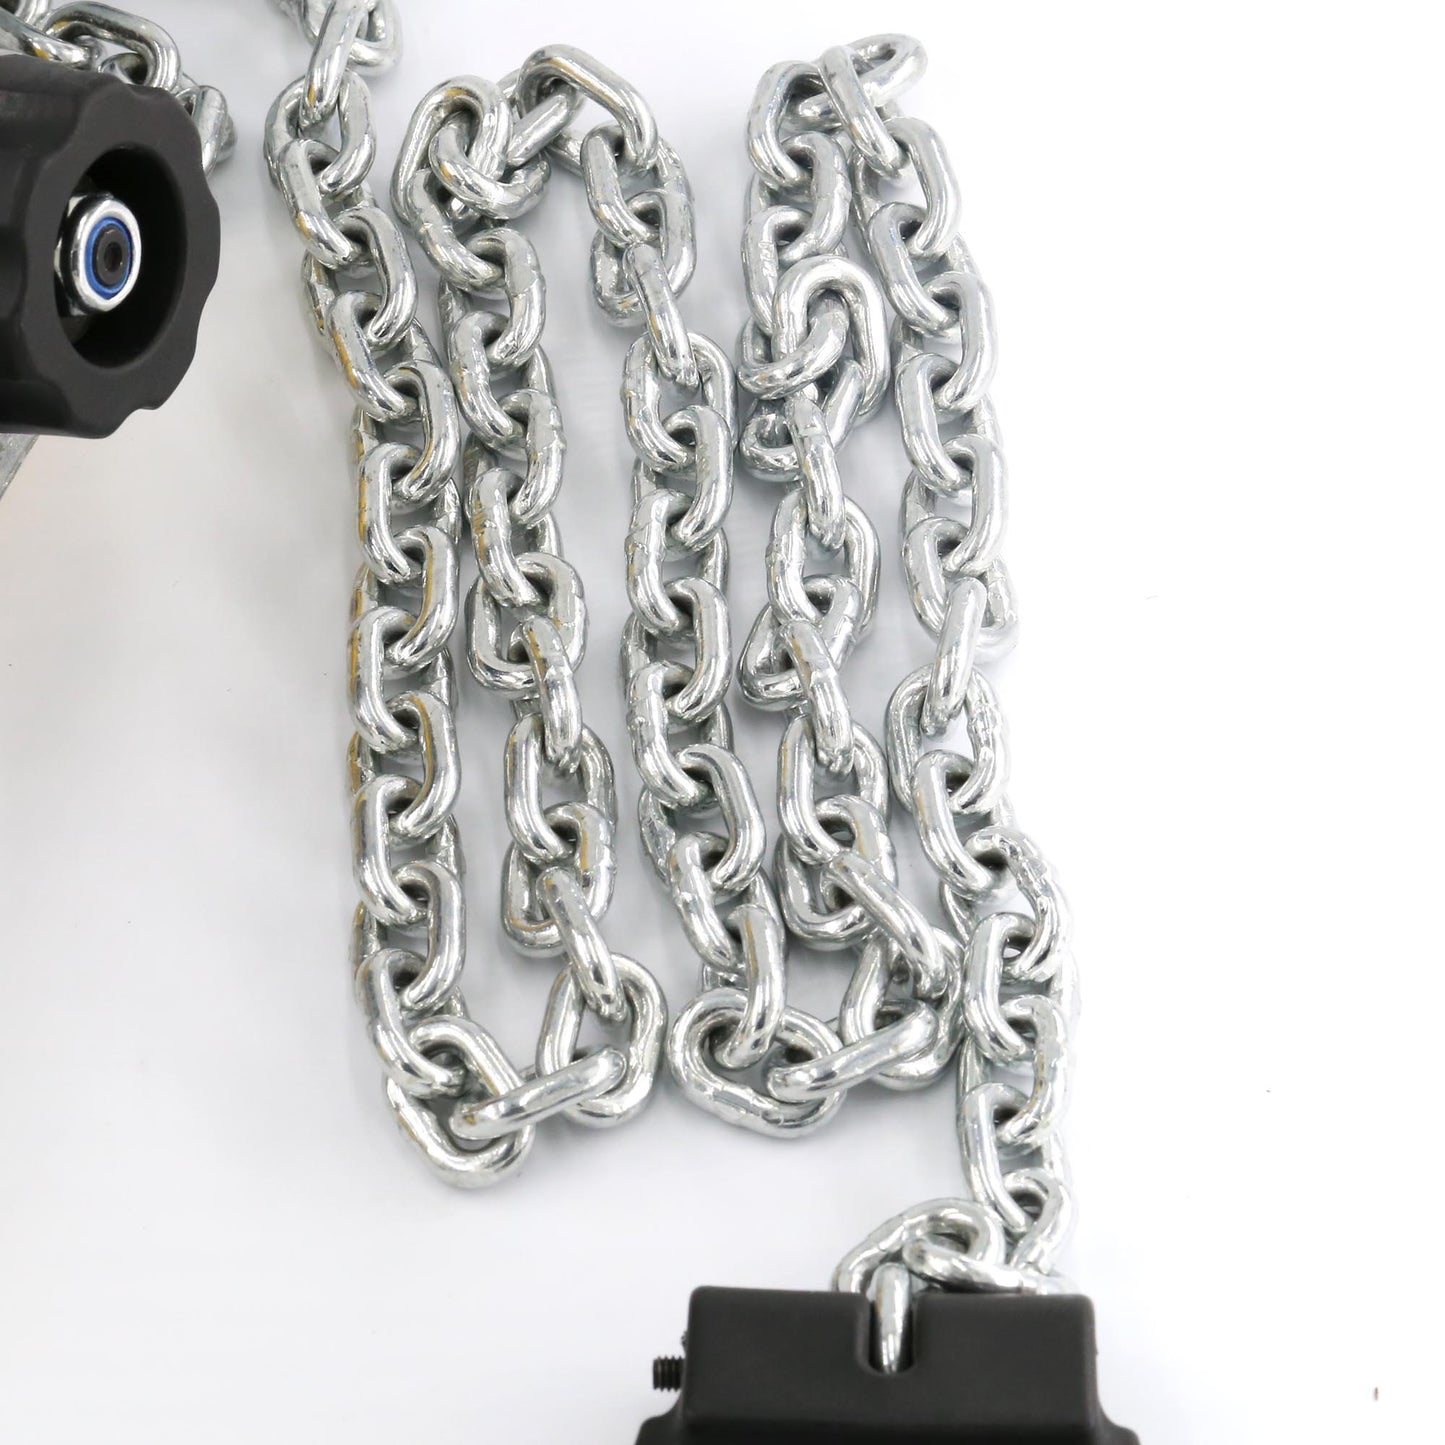 Manual LeverHoist Come Along Puller Rachet Lever Hoist (0.25T-1.5M) Mini Chain Fall Small Hoist 550 lb